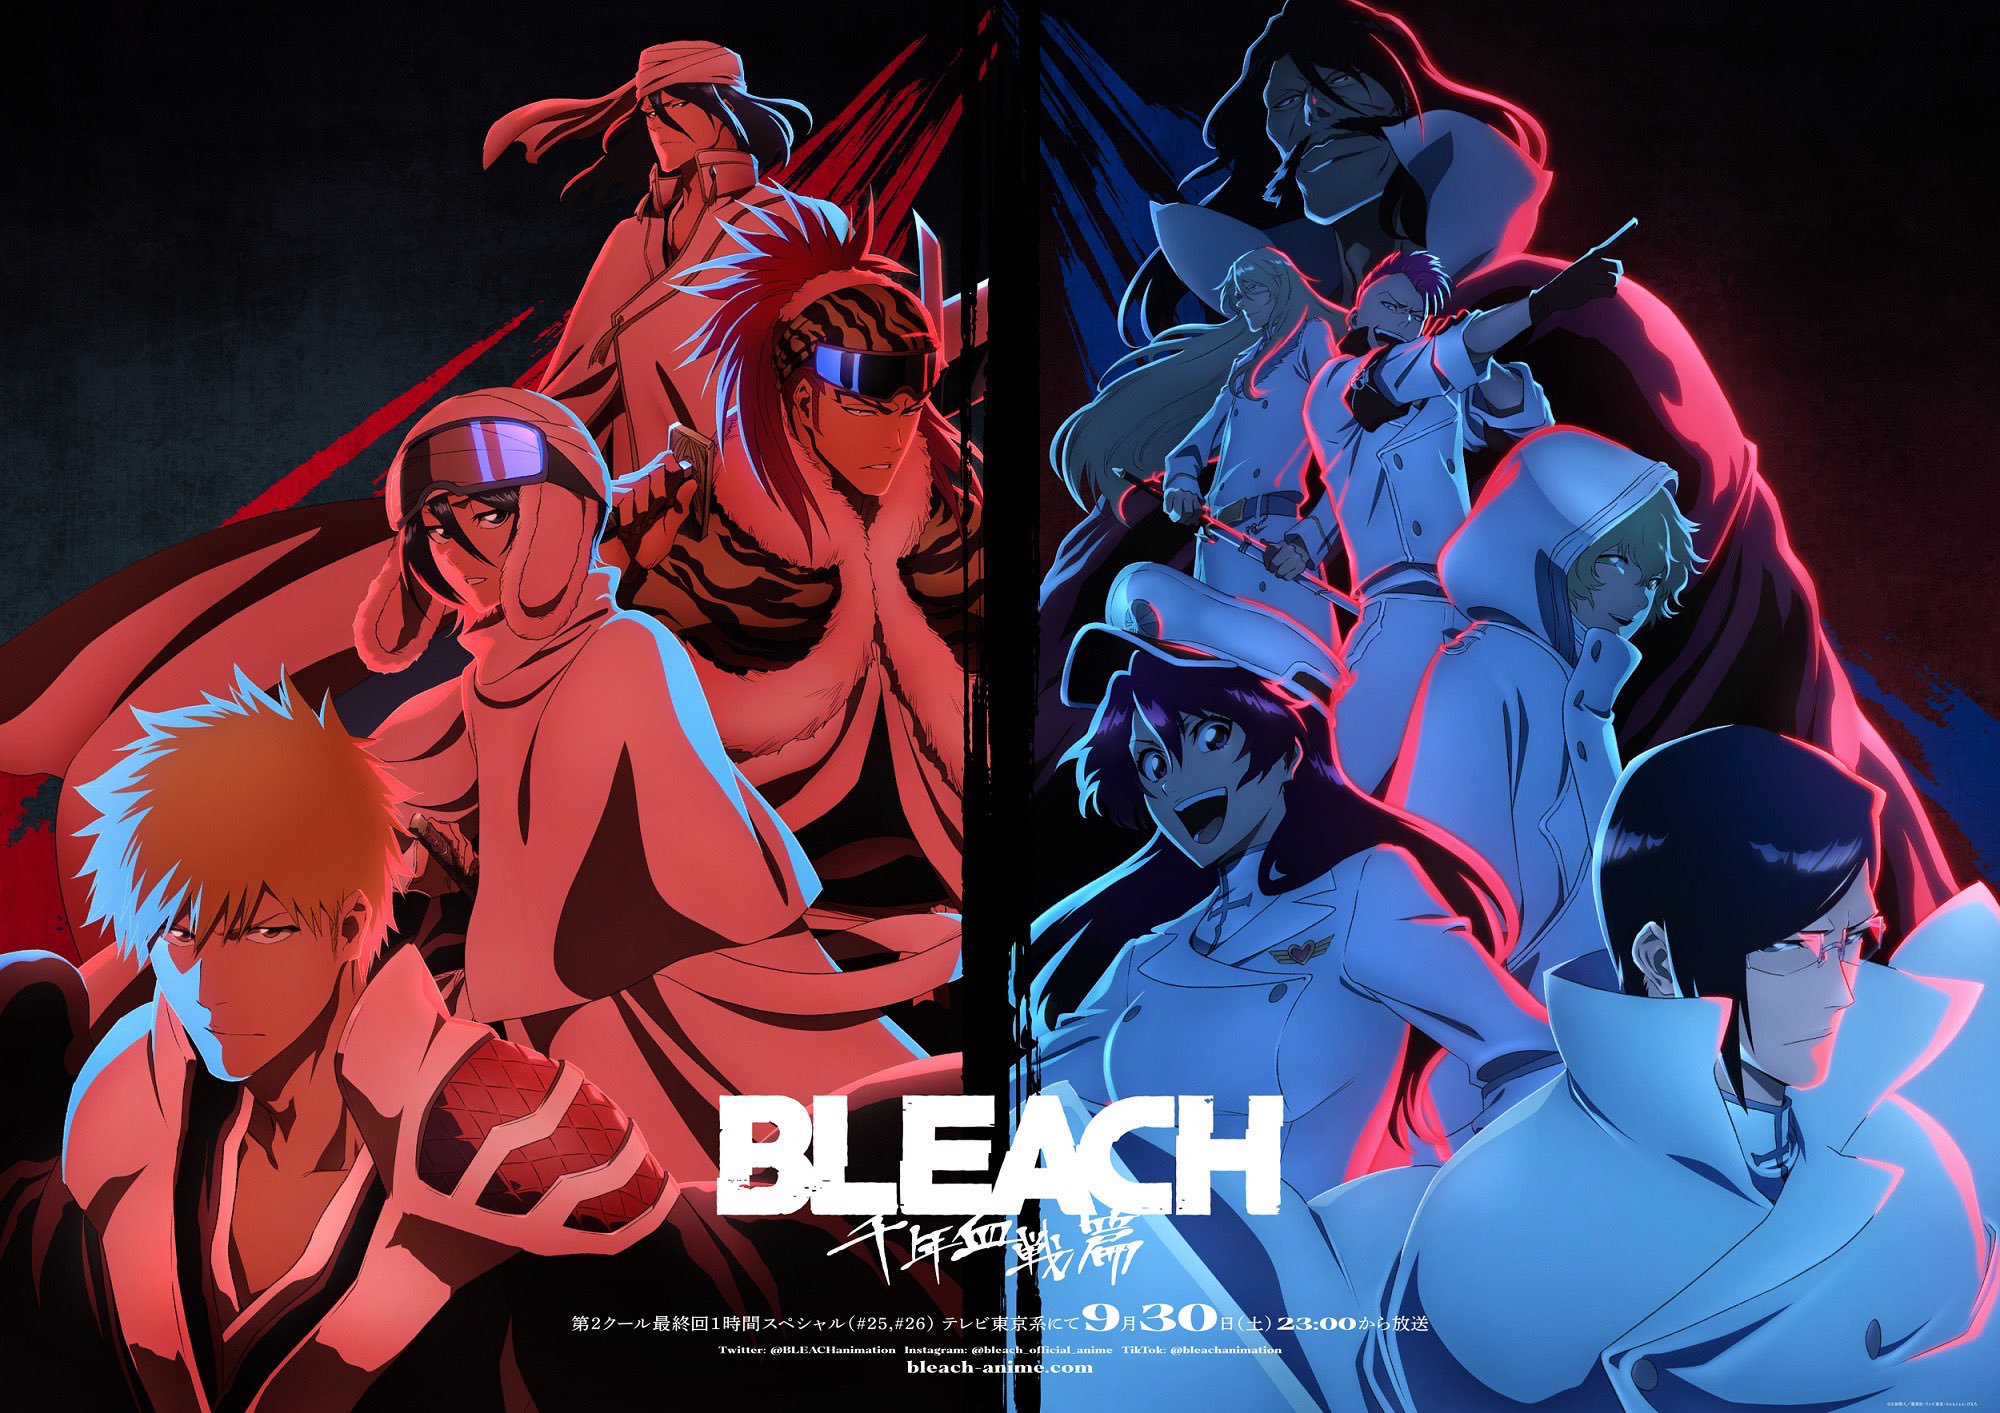 Bleach: Sennen Kessen Hen - Ketsubetsu Tan - Anime - AniDB